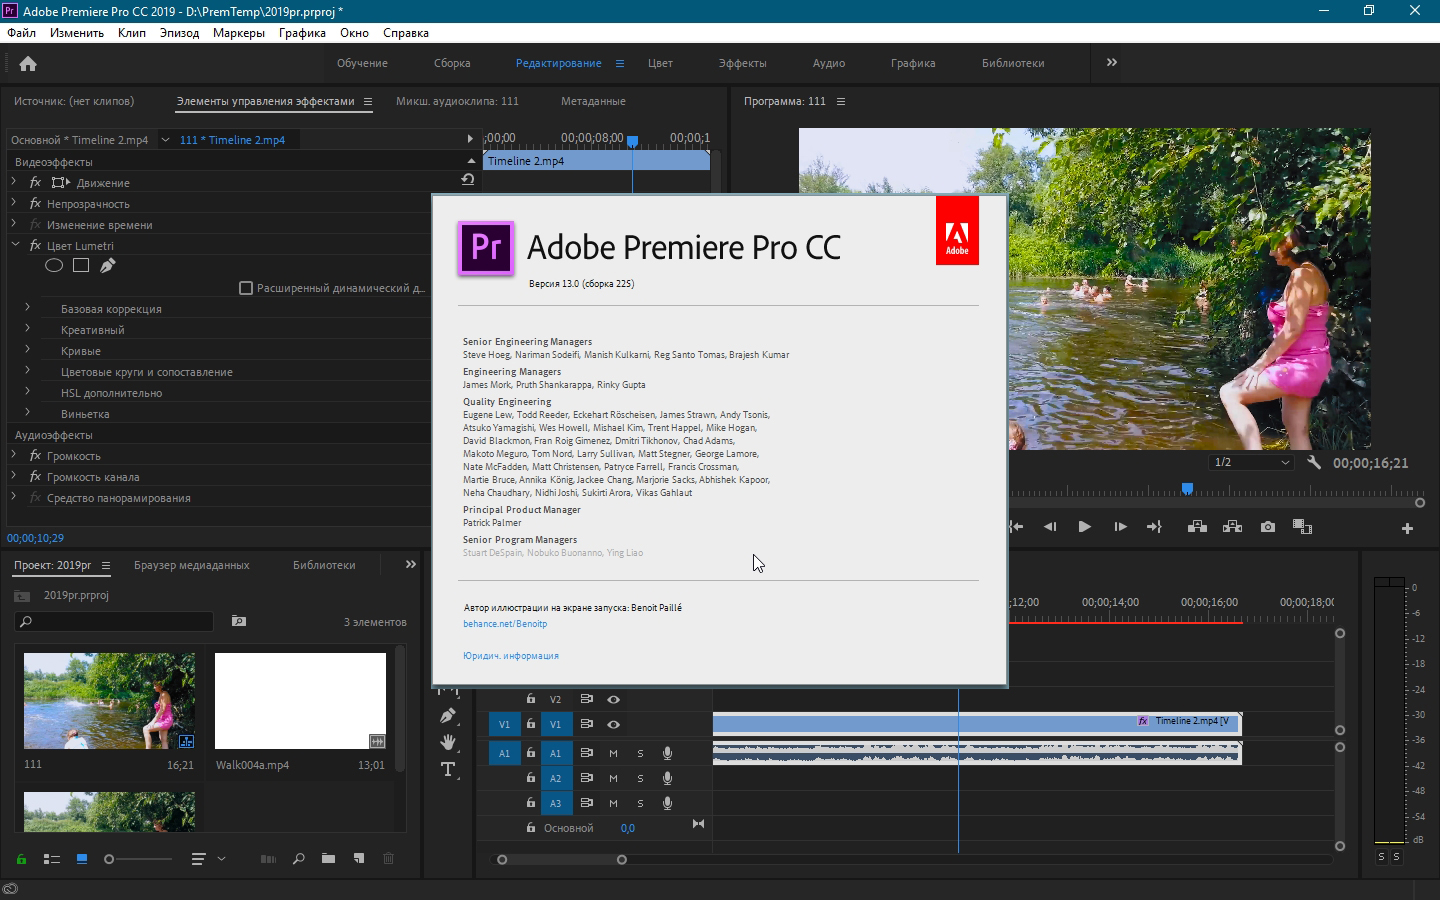 Адоб премьер про версии. Premier Pro. Adobe Premiere Pro cc. Adobe Premiere Pro Pro 2019. Библиотека в Adobe Premiere Pro.